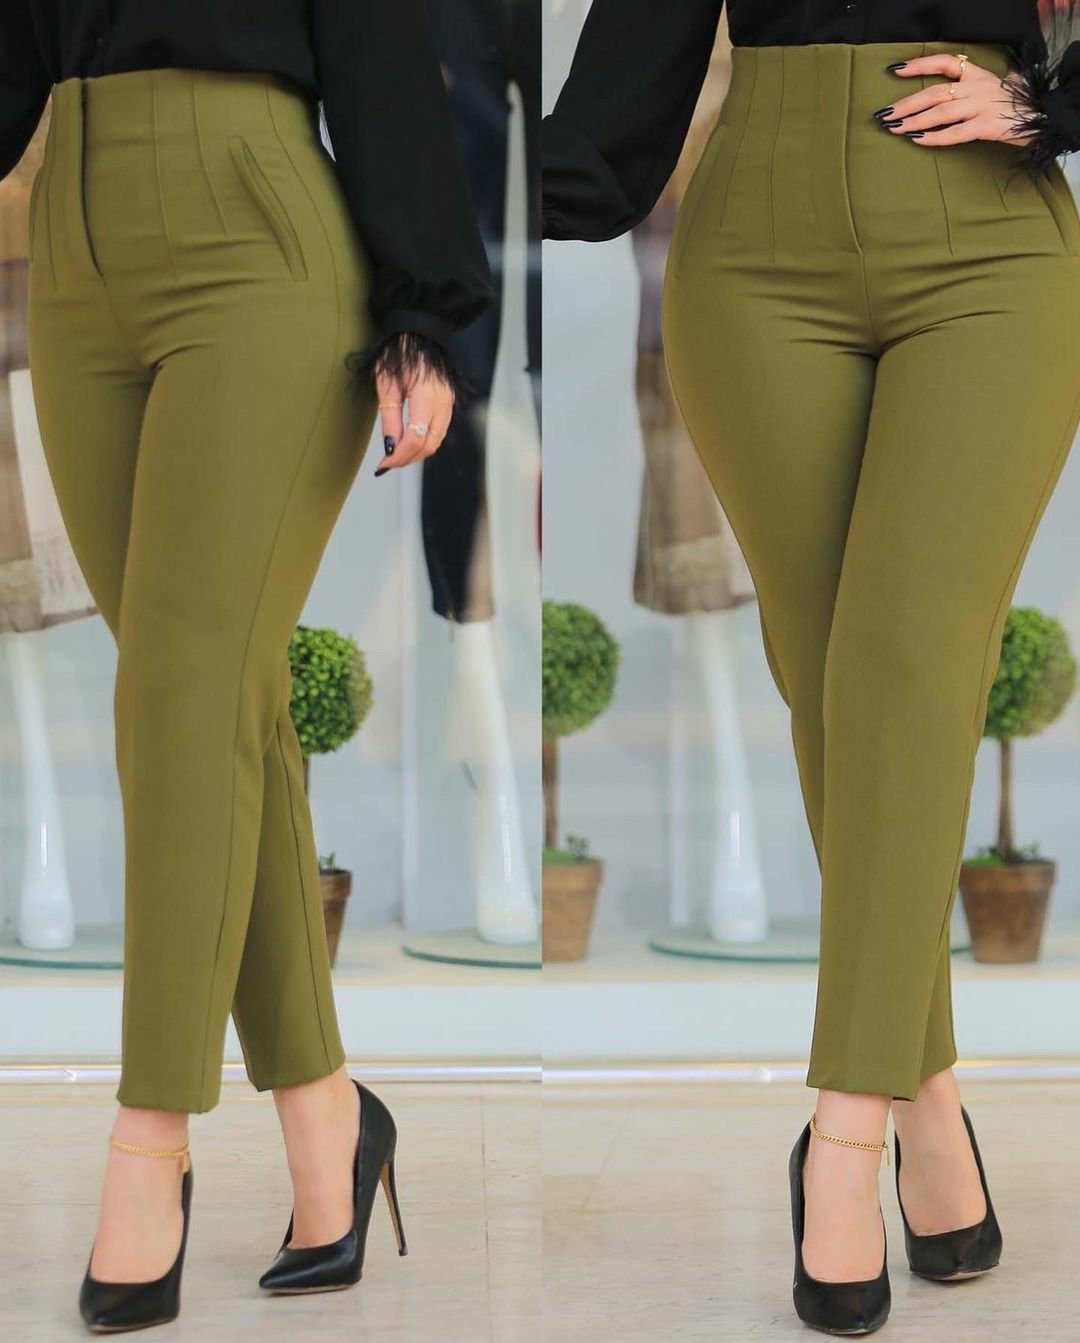 Belted formal pants From Zara – HighBuy